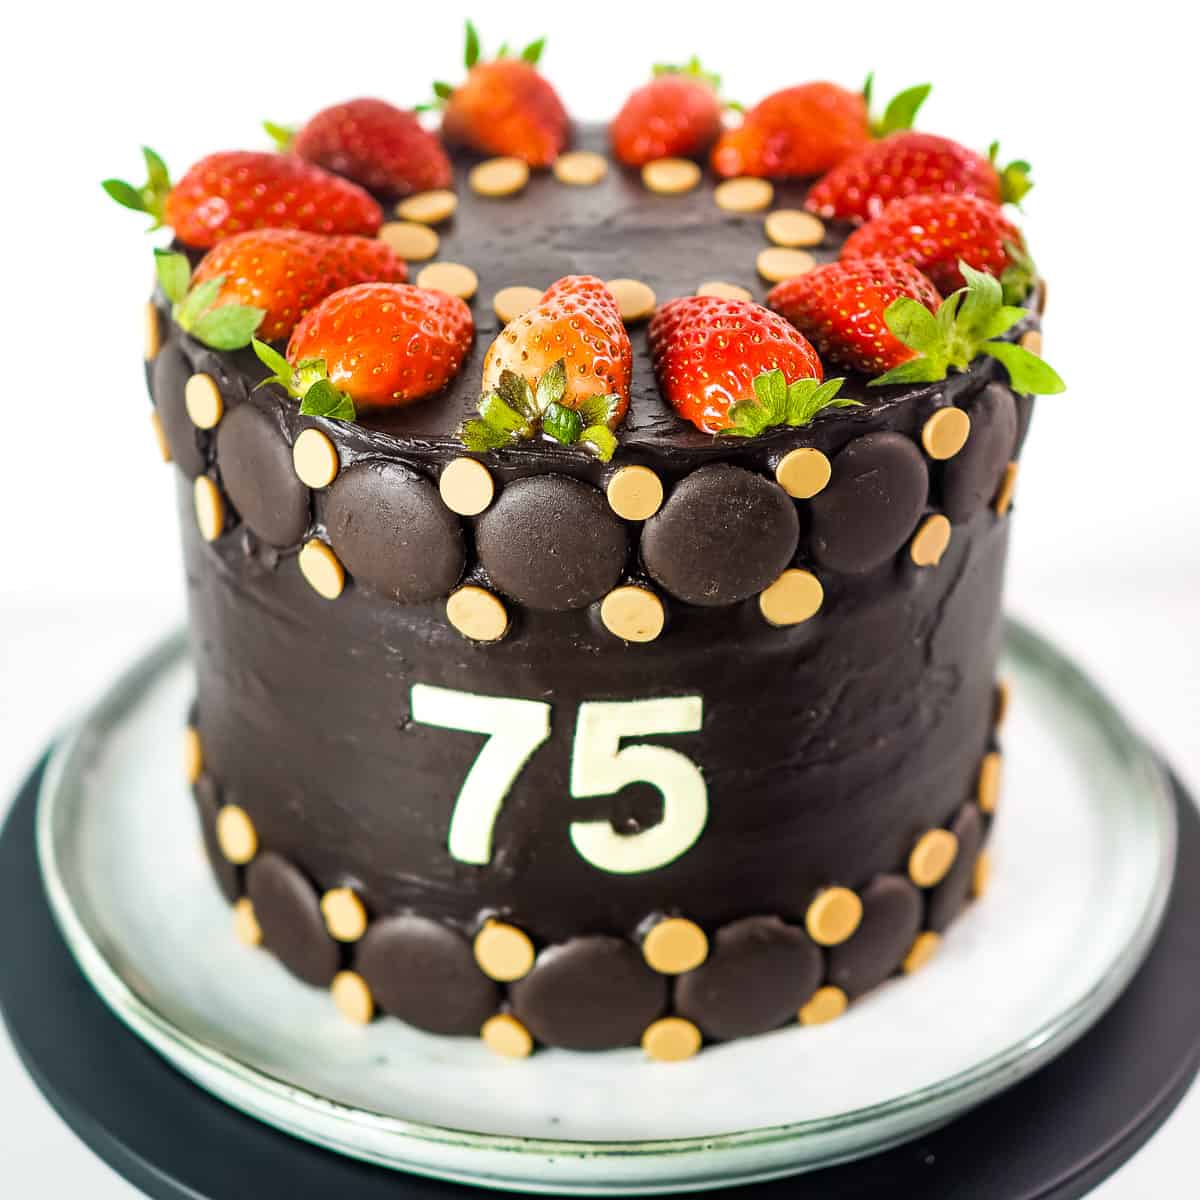 75th Birthday Cake Idea for Dad